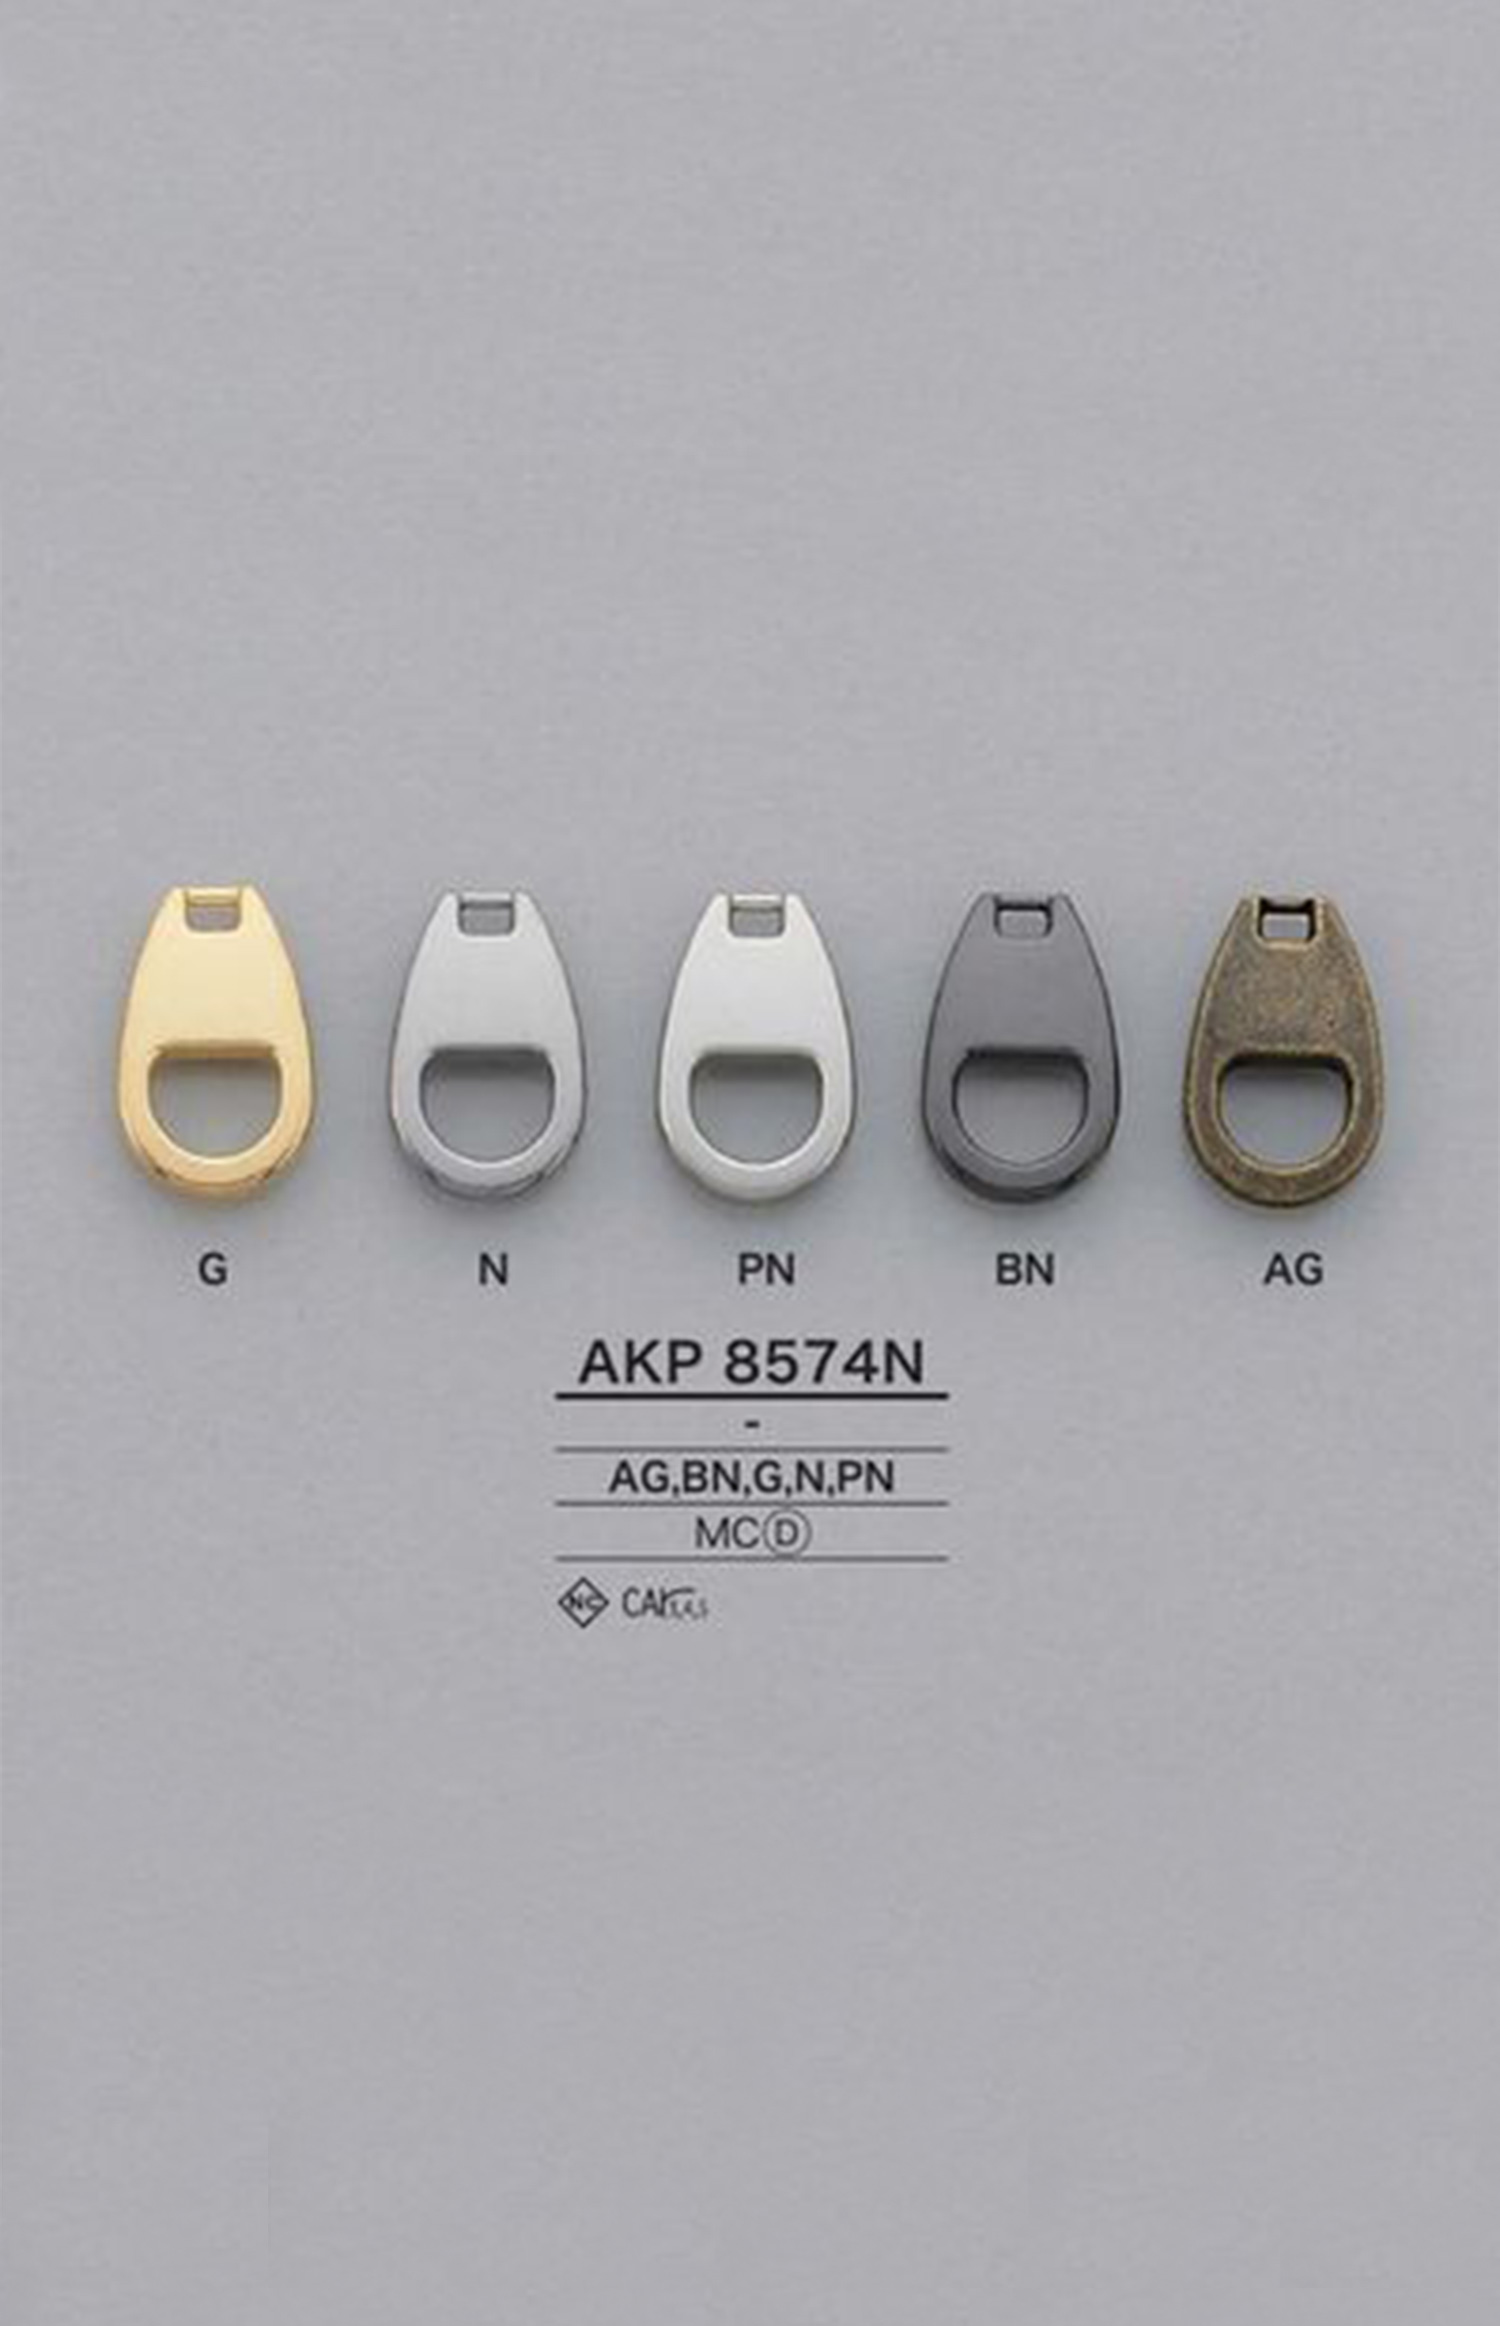 AKP8574N Ovaler Reißverschlusspunkt (Zuglasche) IRIS